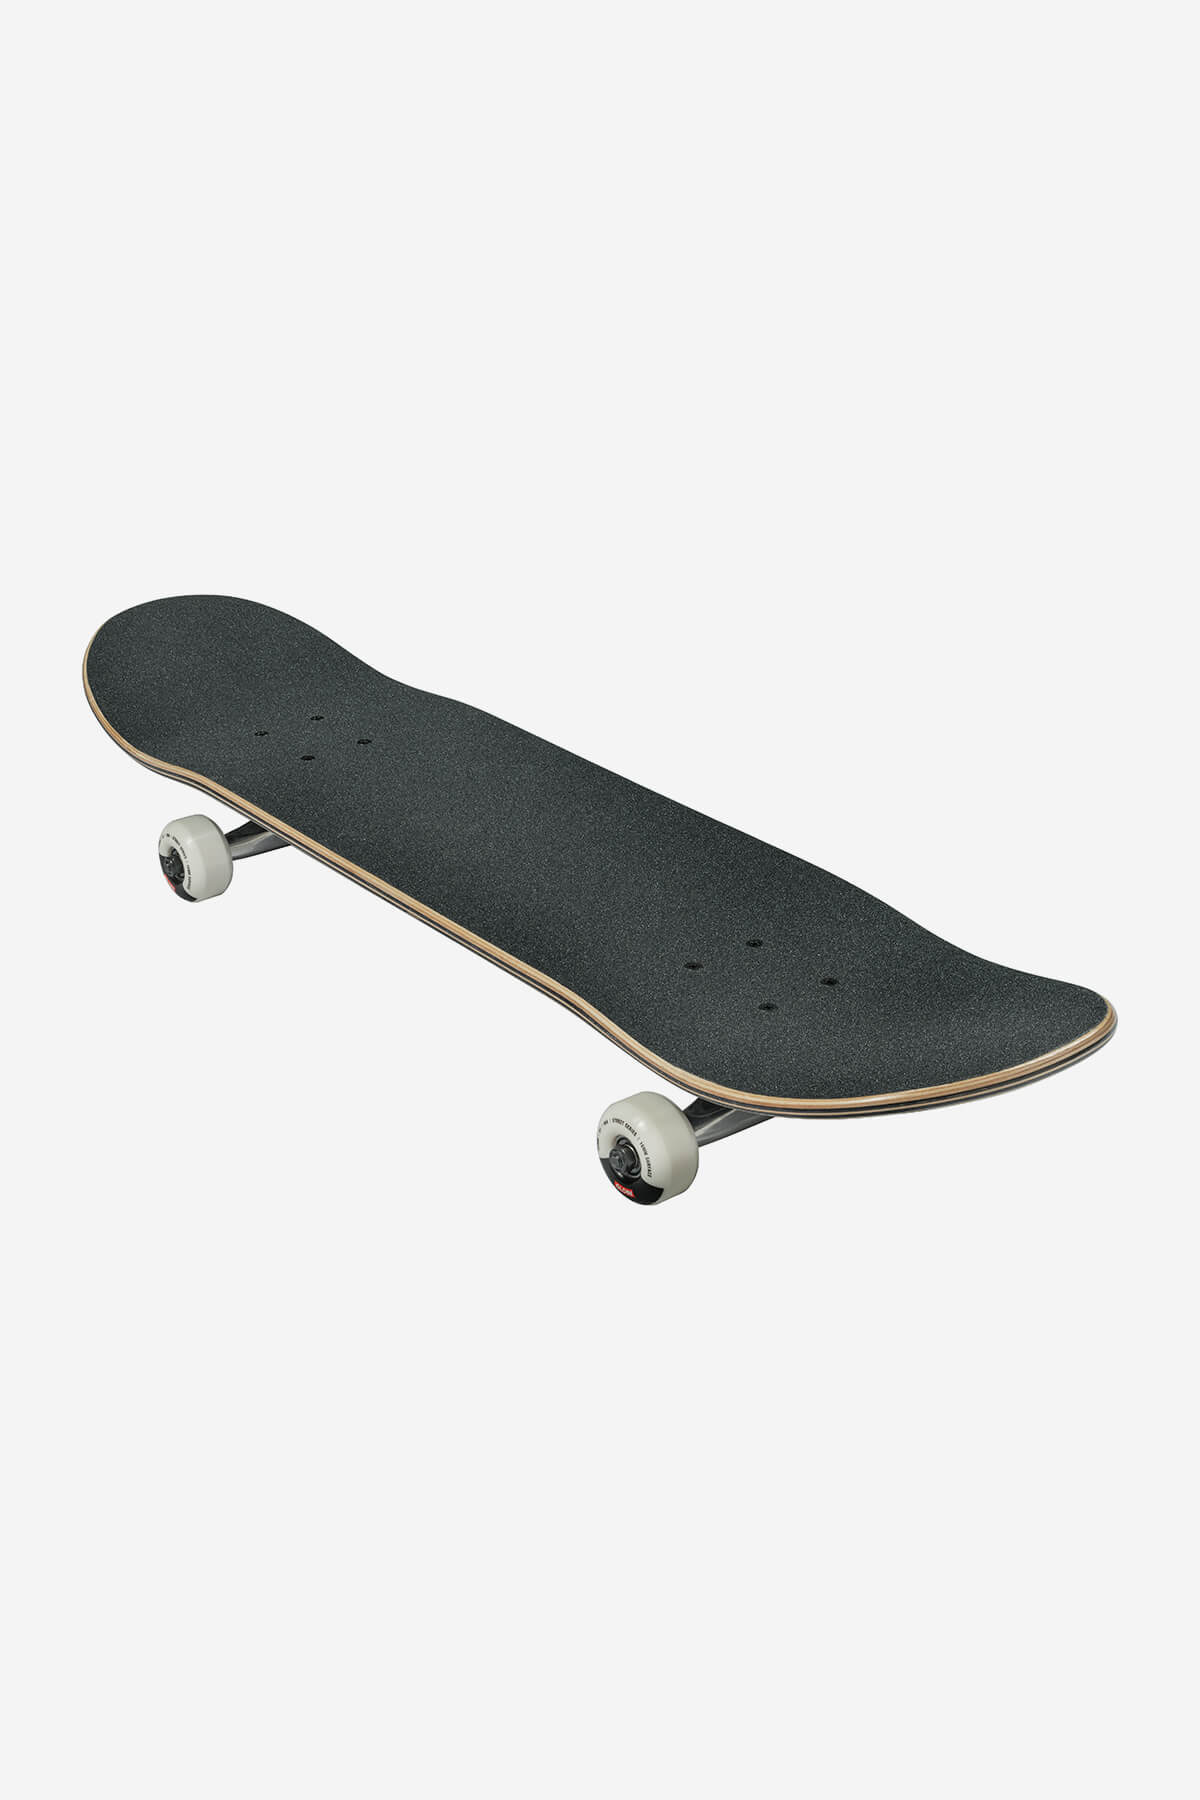 g1 lineform nero 7,75" completo skateboard